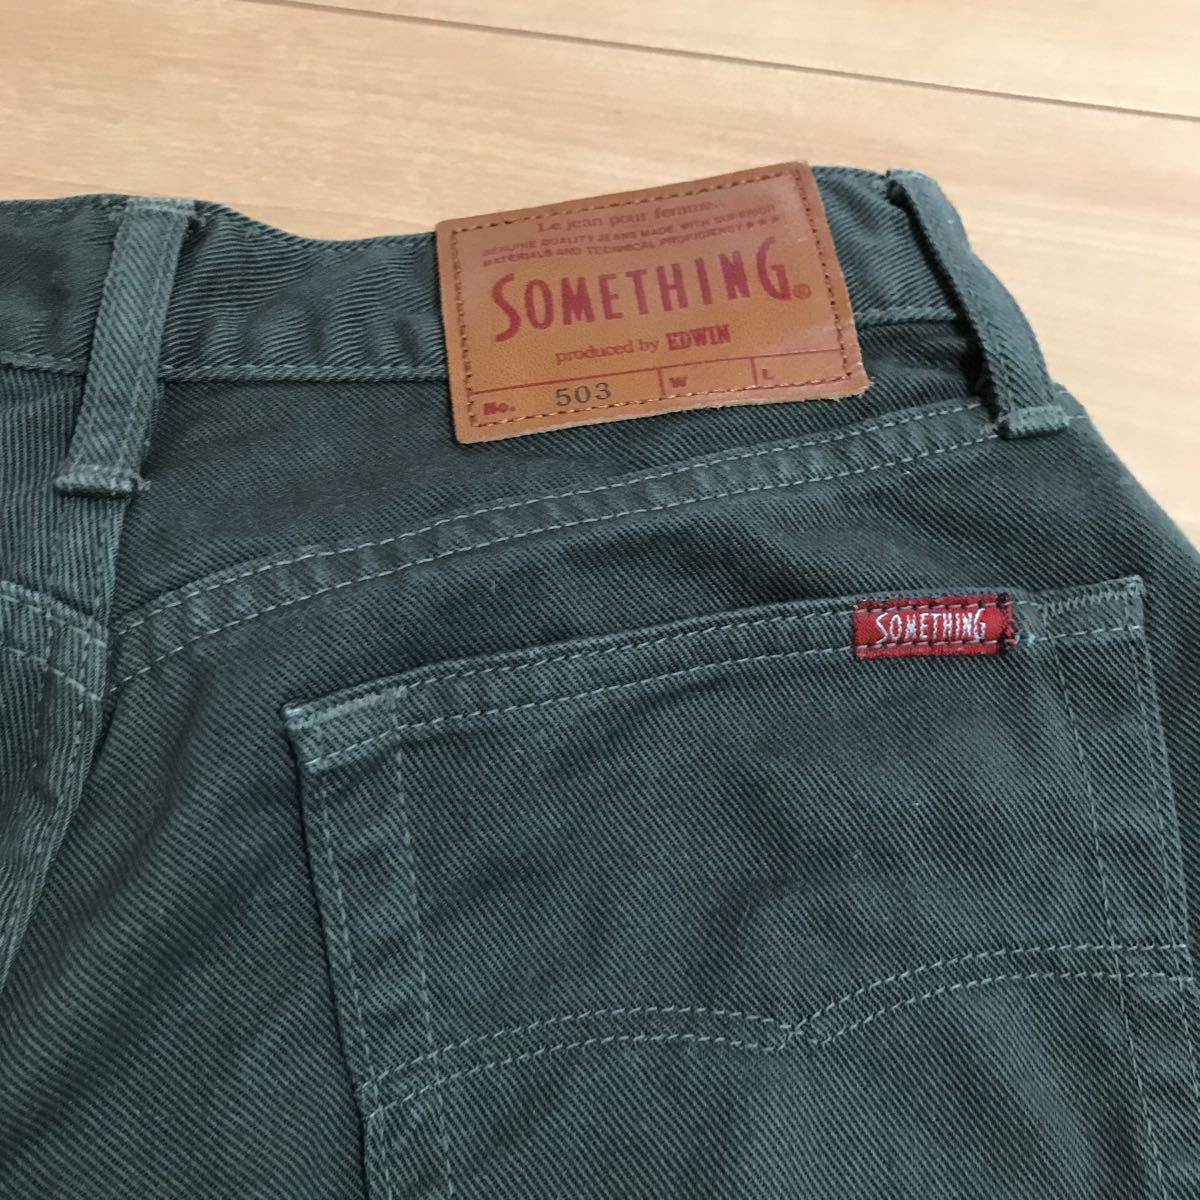 [ б/у ]SOMETHING EDWIN 503 брюки размер 29×32 Something 